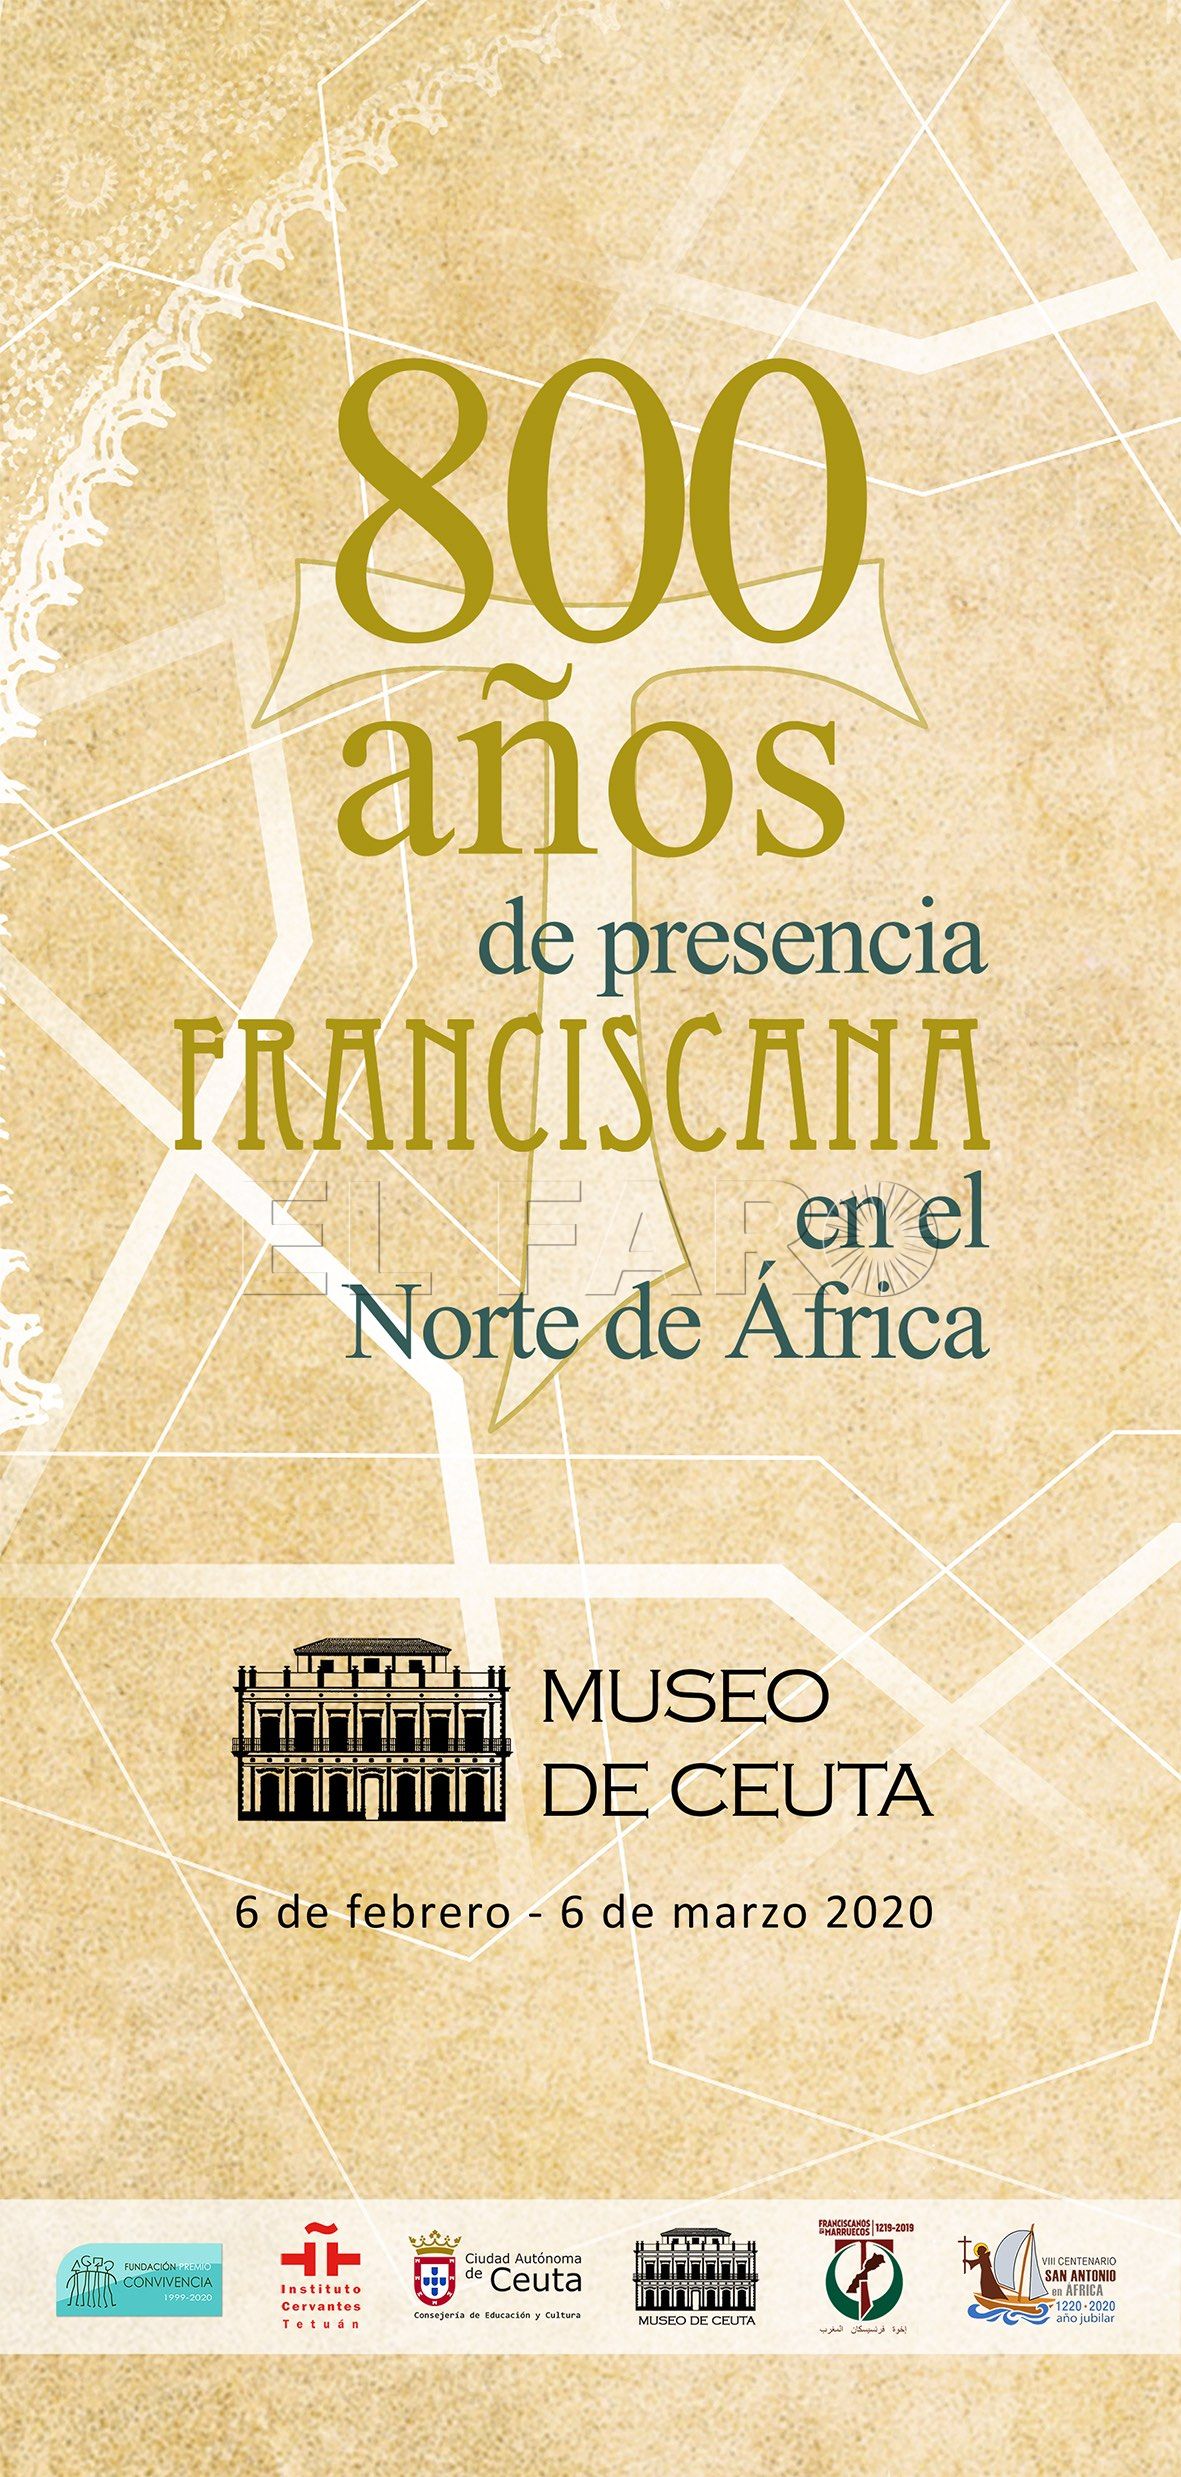 cartel-exposicion-franciscana